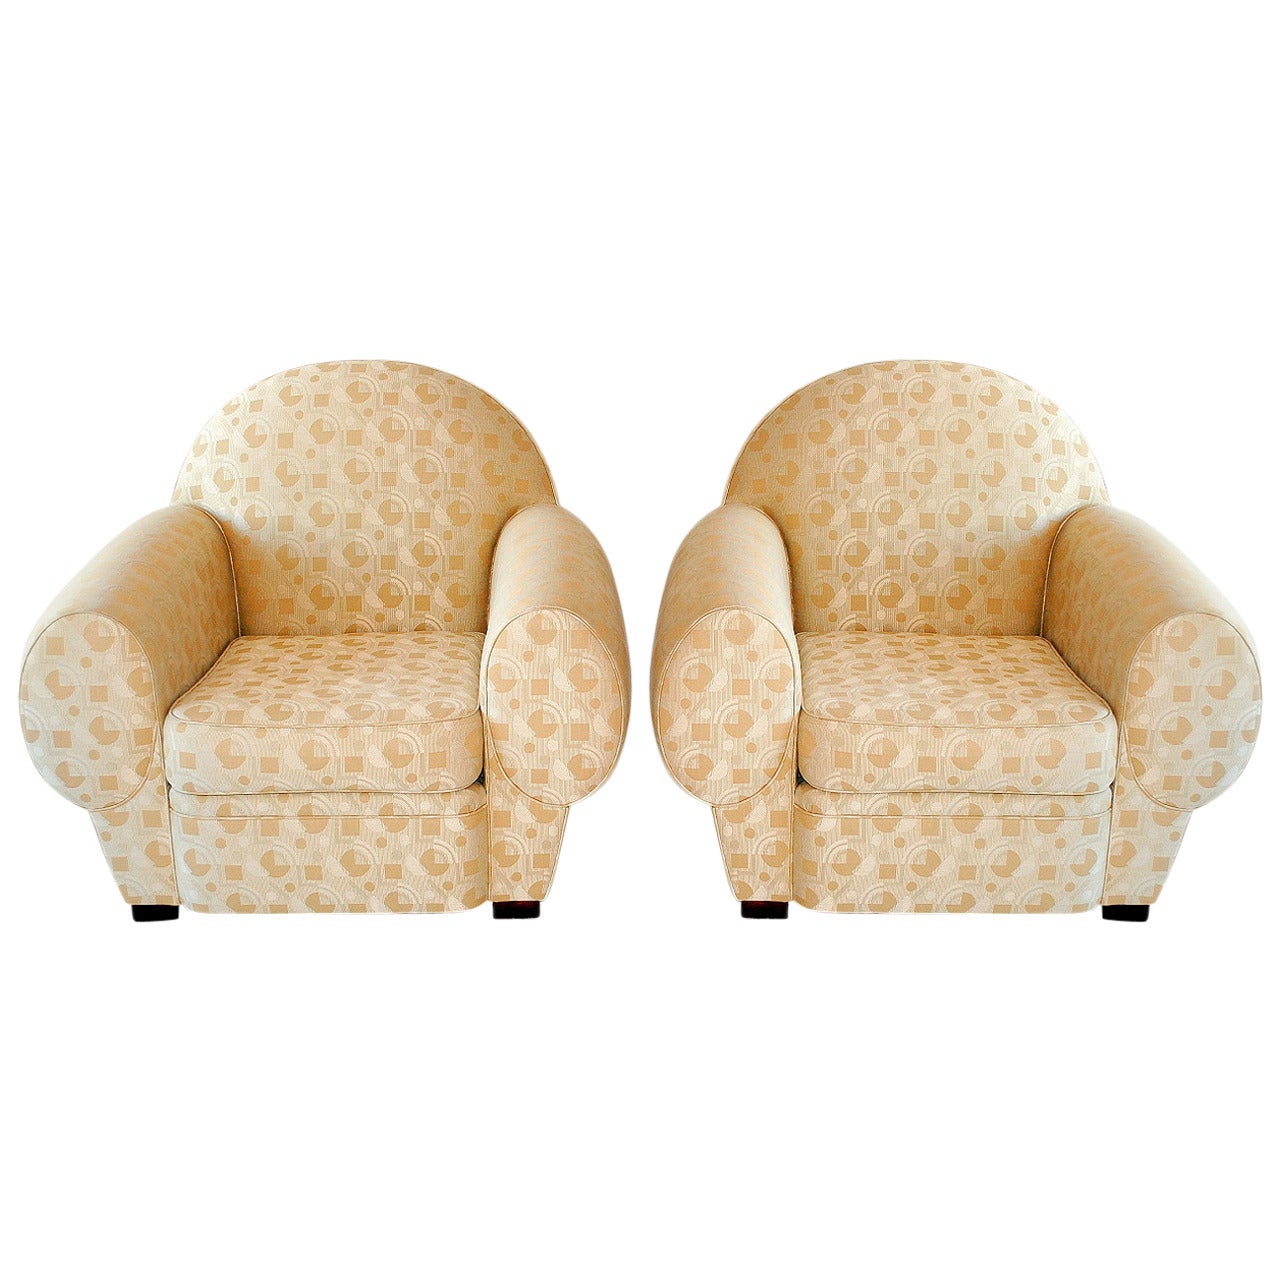 Rare Pair of Elephant Chairs, De La Londe Ruhlmann